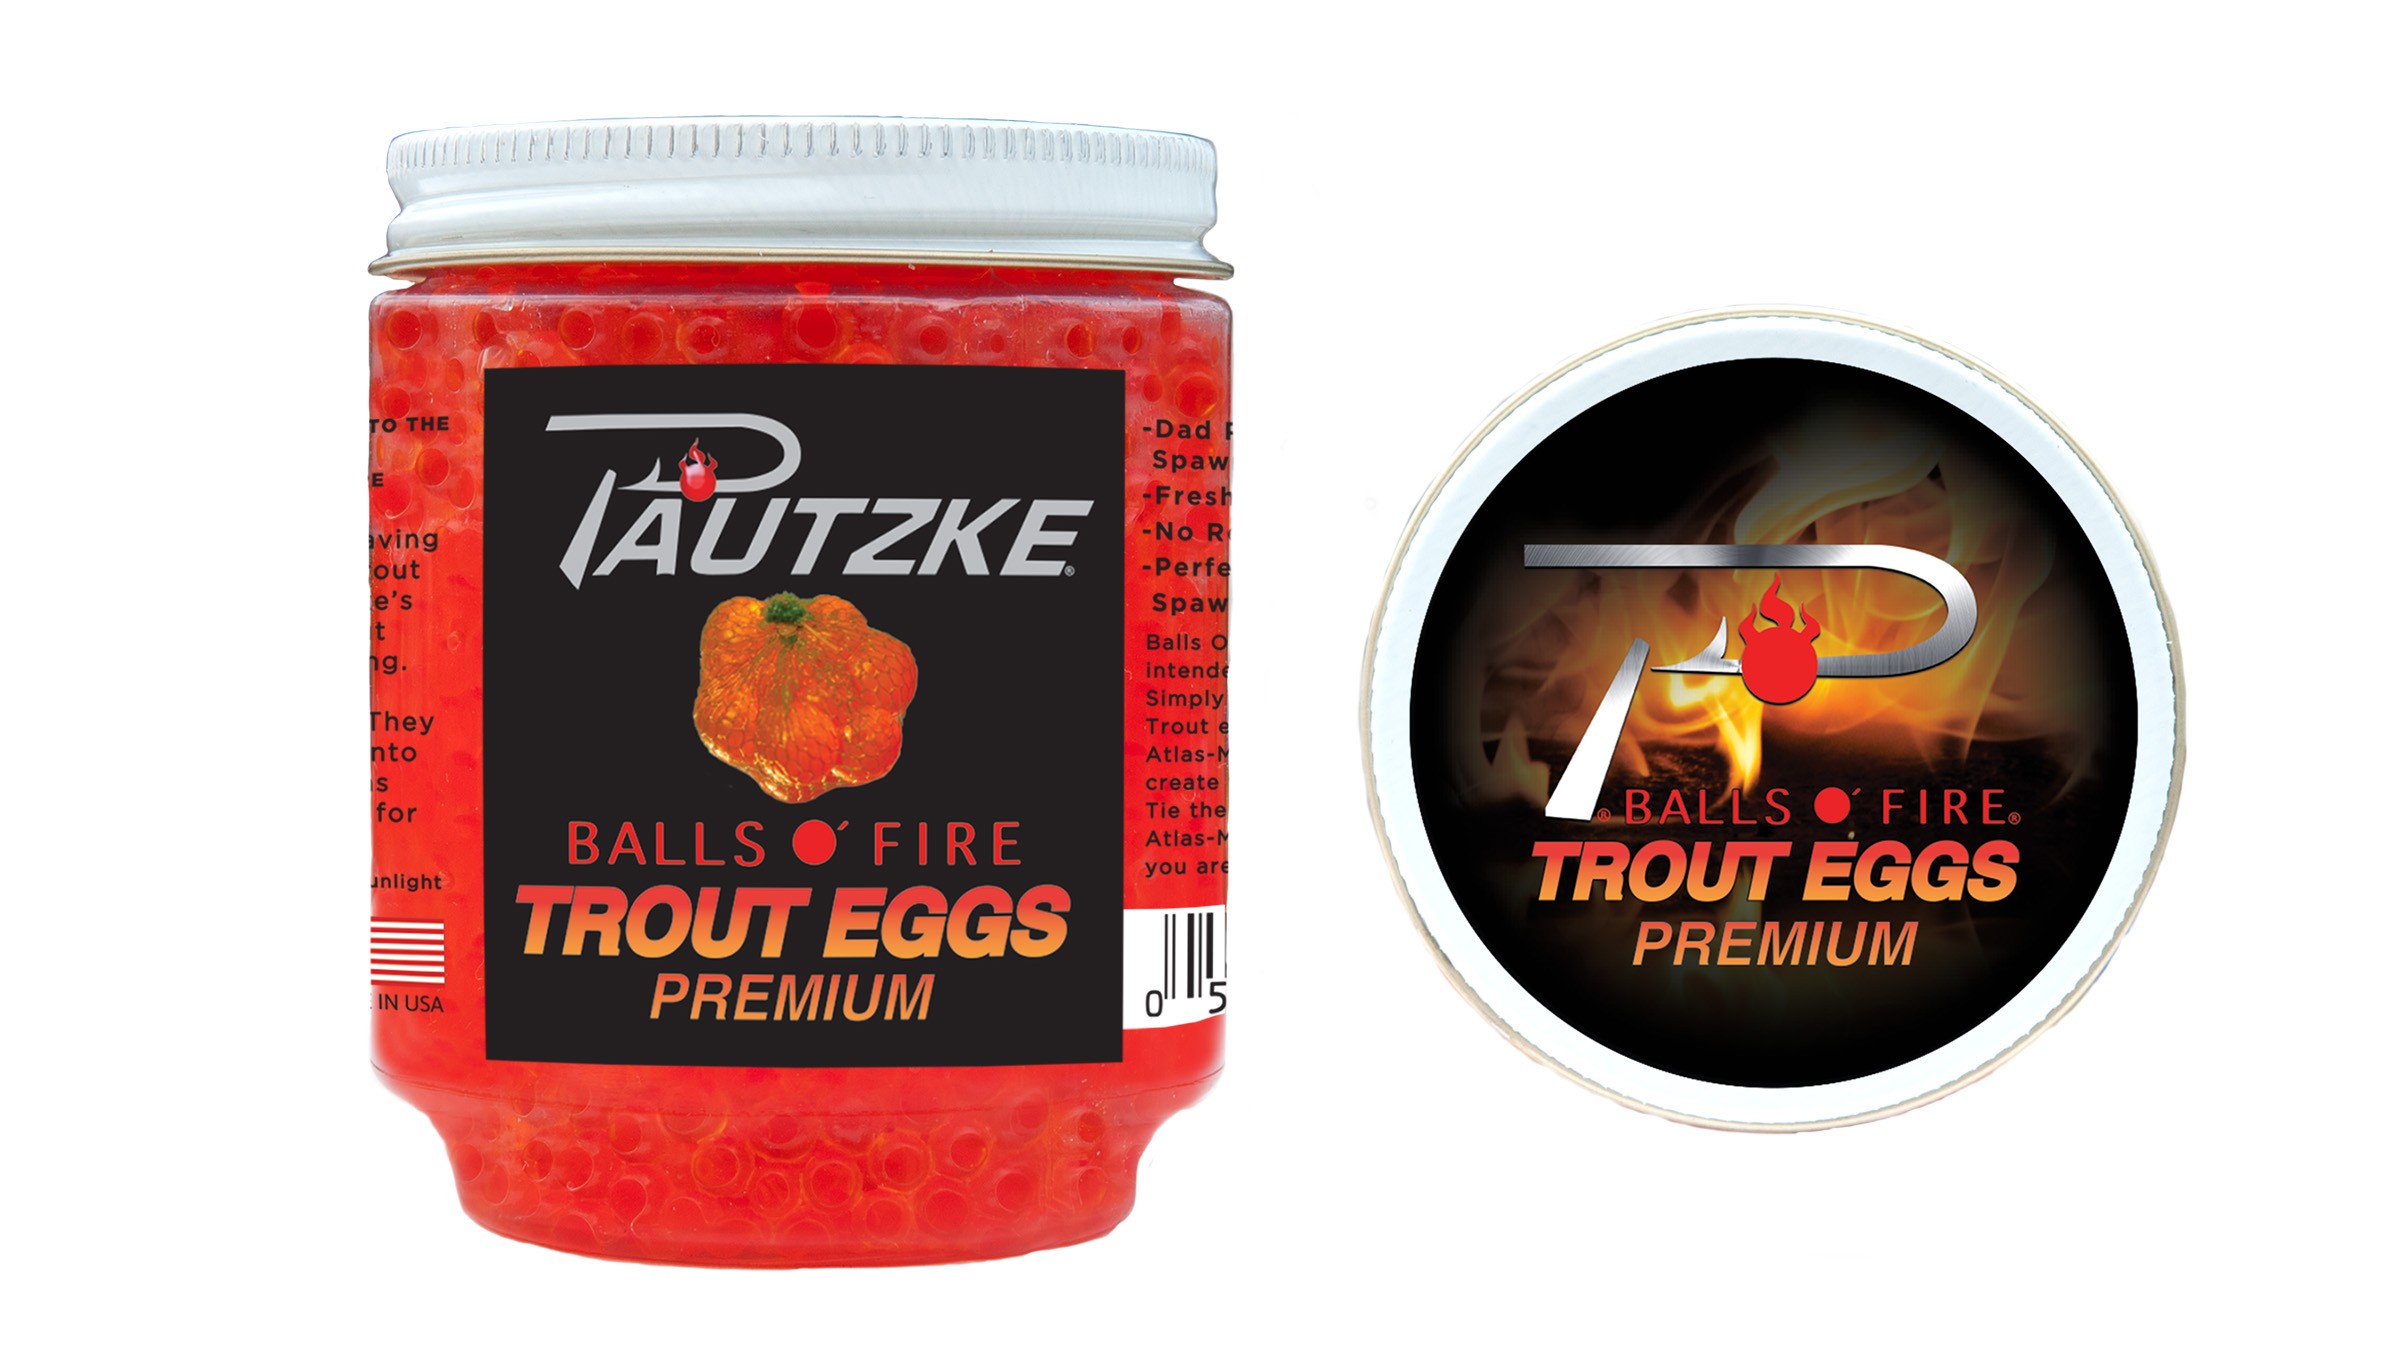 http://hooklineandsinker.ca/wp-content/uploads/2020/01/Pautzke-Balls-O-Fire-Premium-Trout-Eggs-Trout-Eggs-Premium-jar-and-lid.jpg